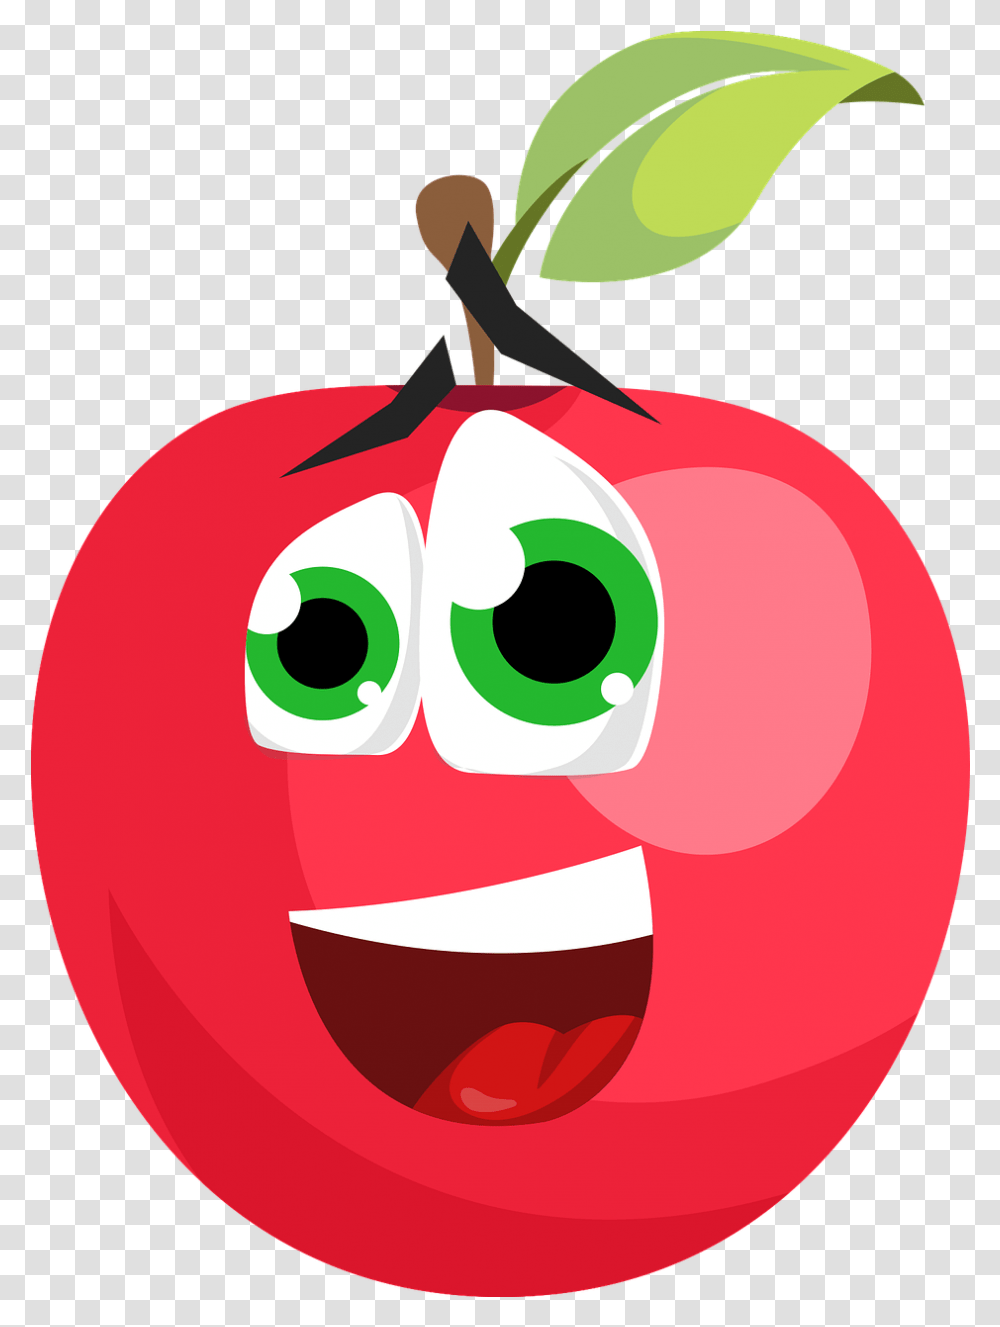 Apple Fruit Cartoon Desenhos De Frutas Animadas, Plant, Vegetable, Food, Tomato Transparent Png